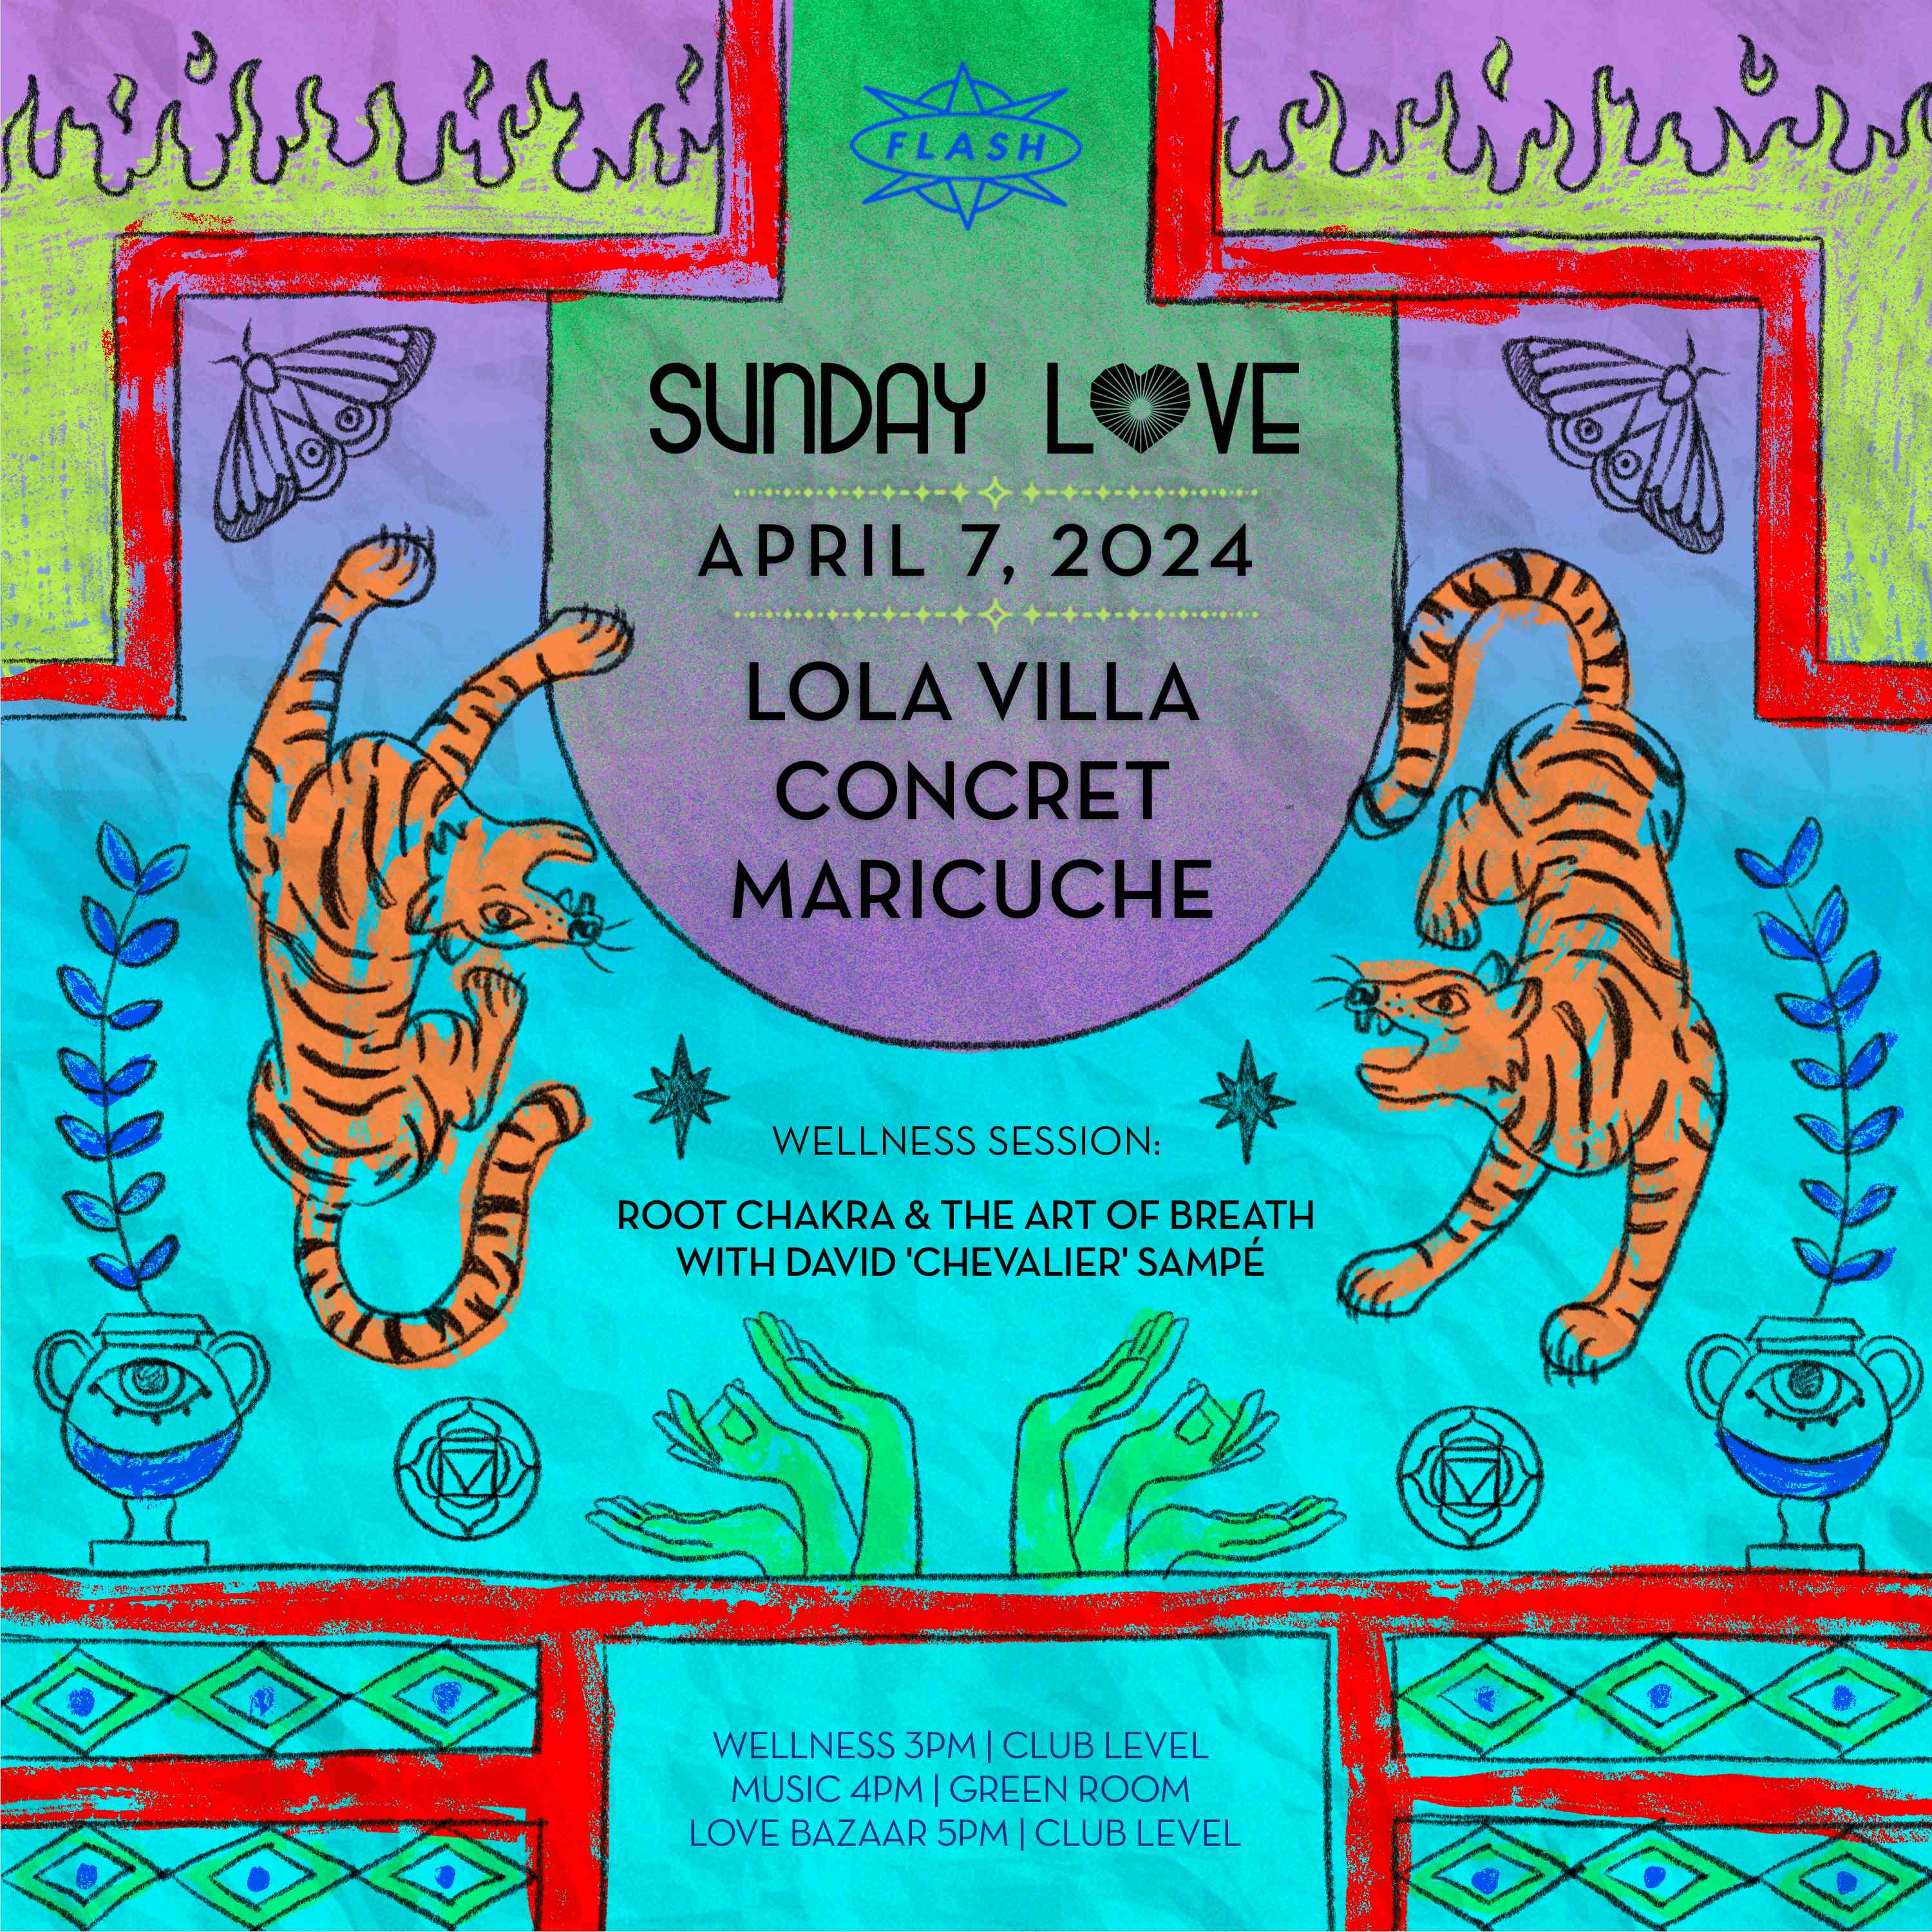 Sunday Love: Lola Villa - CONCRET - Maricuche event flyer